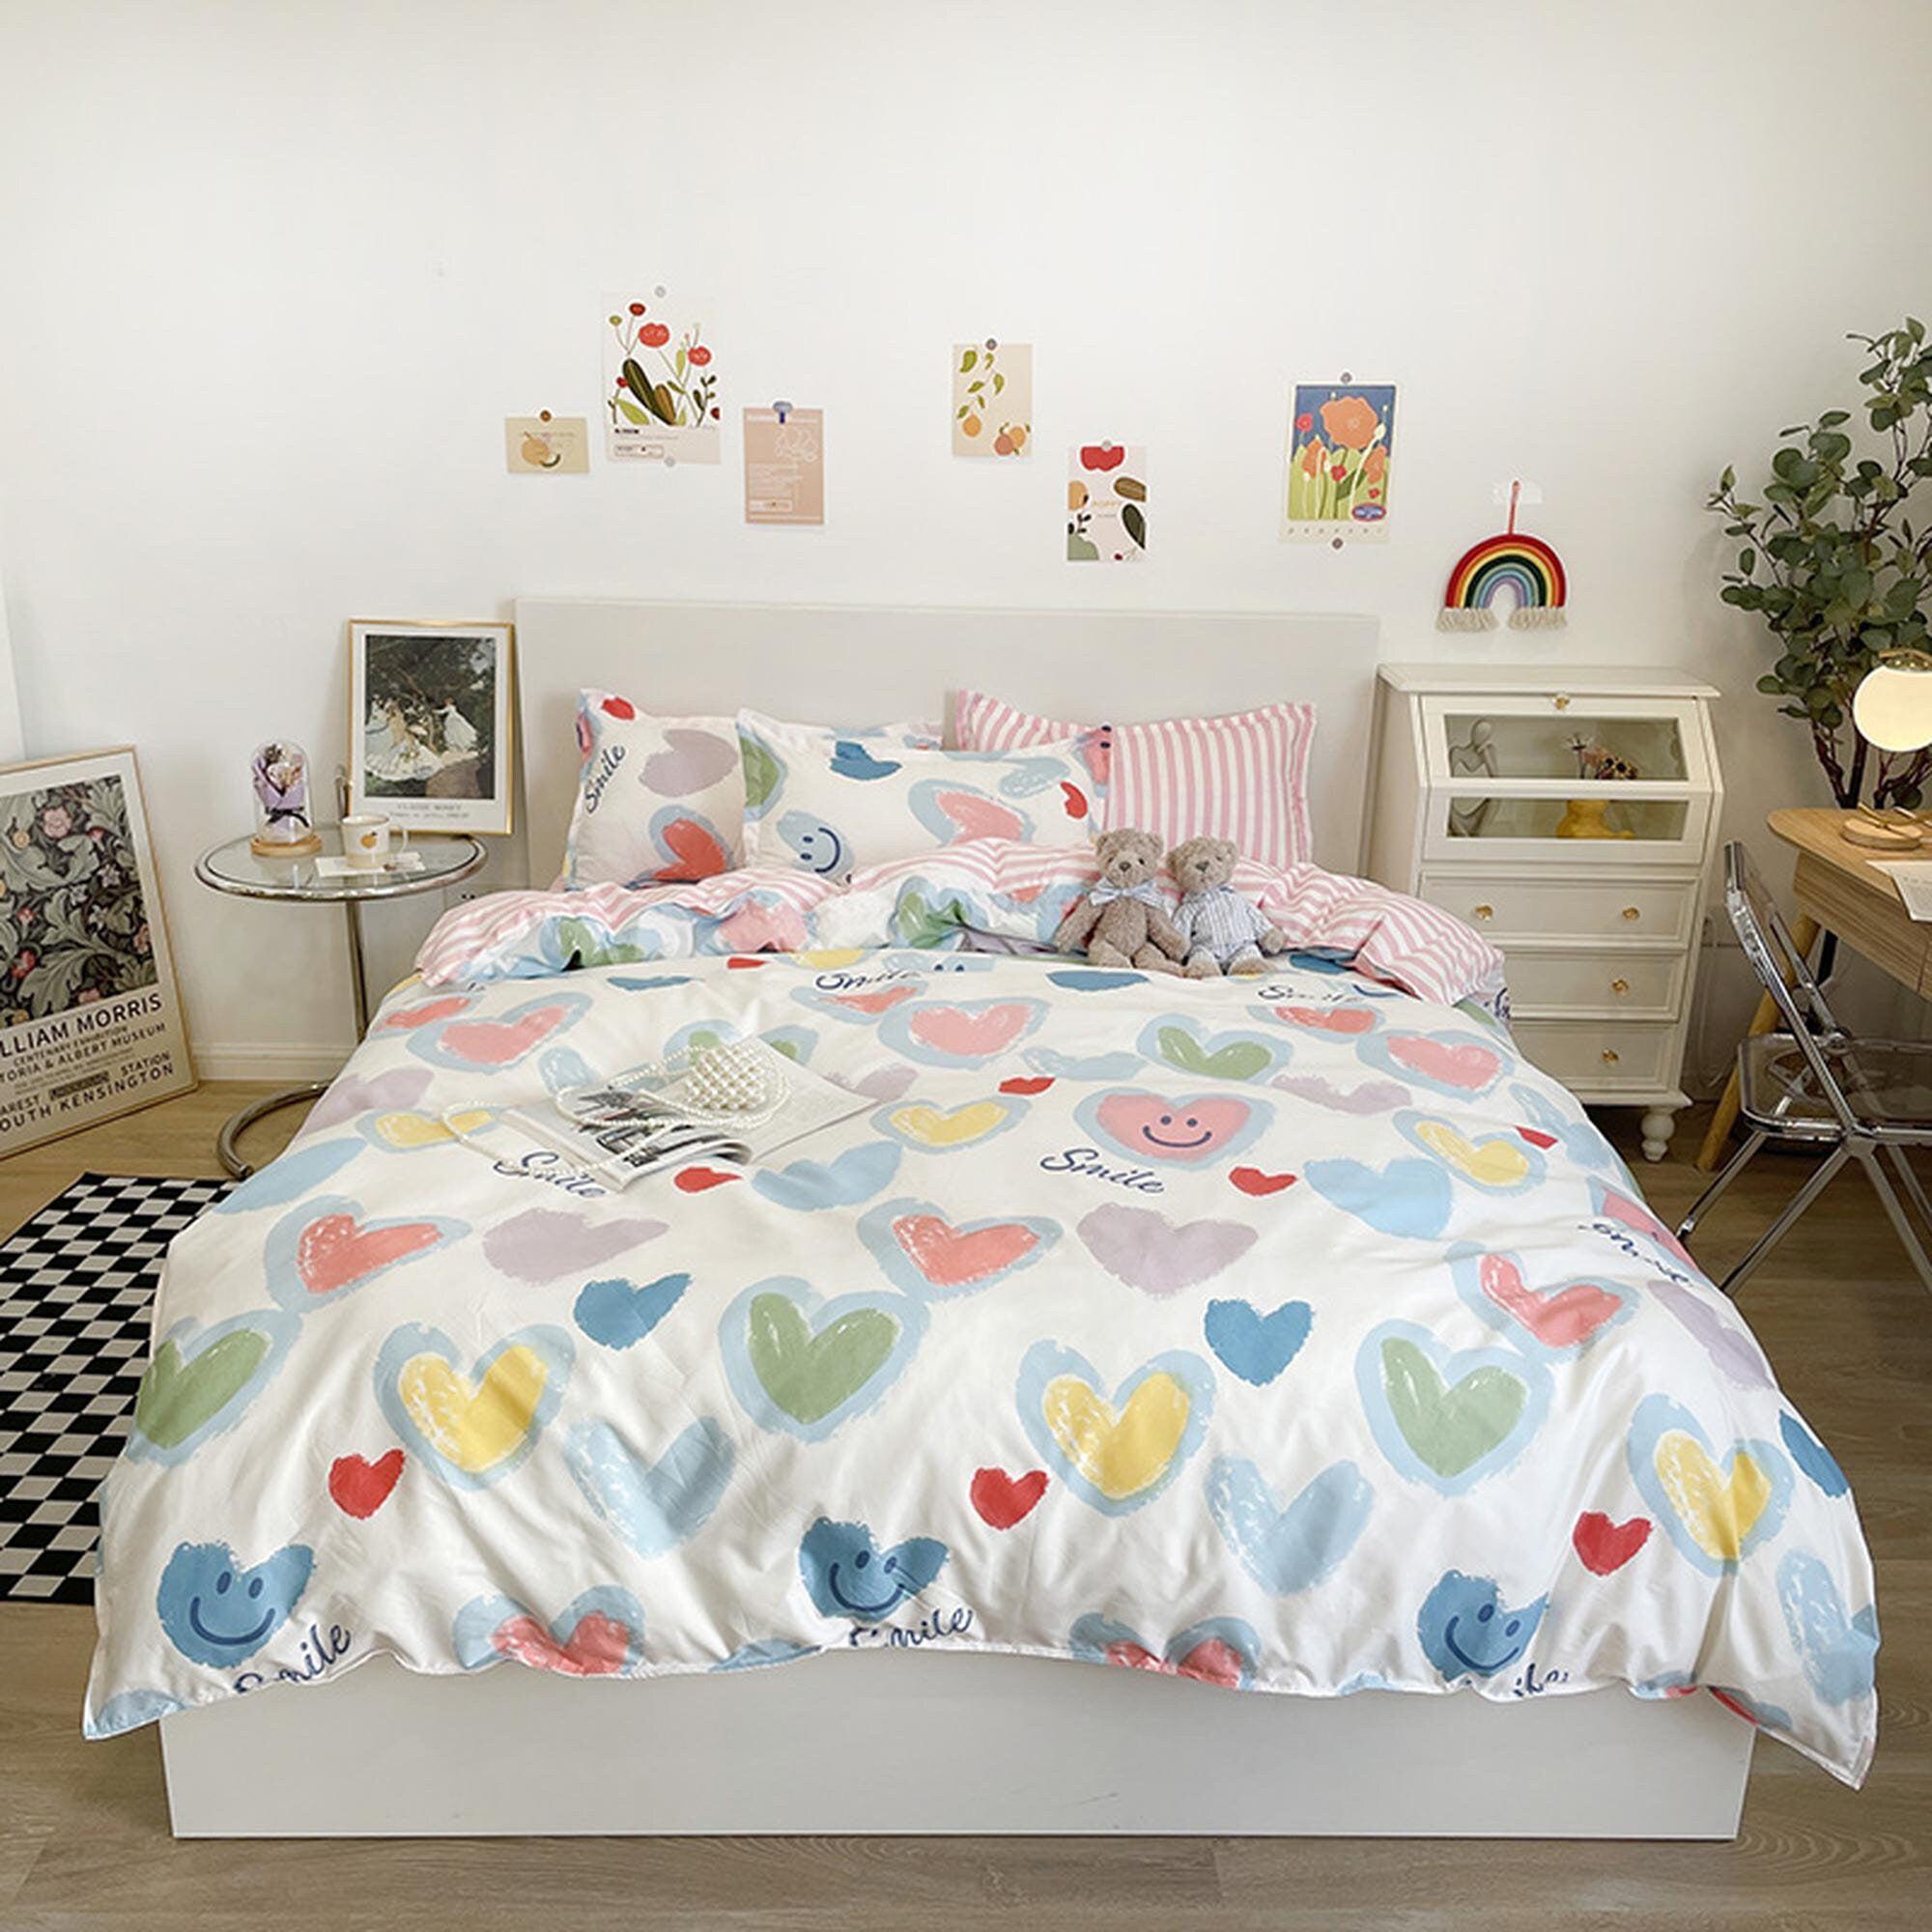 daintyduvet Cute Bedding Set, Pink Bedding Flat Sheet, Kawaii Dorm Bedding, Aesthetic Bedding Stripes, Kids Duvet Cover King Queen Full Twin Single